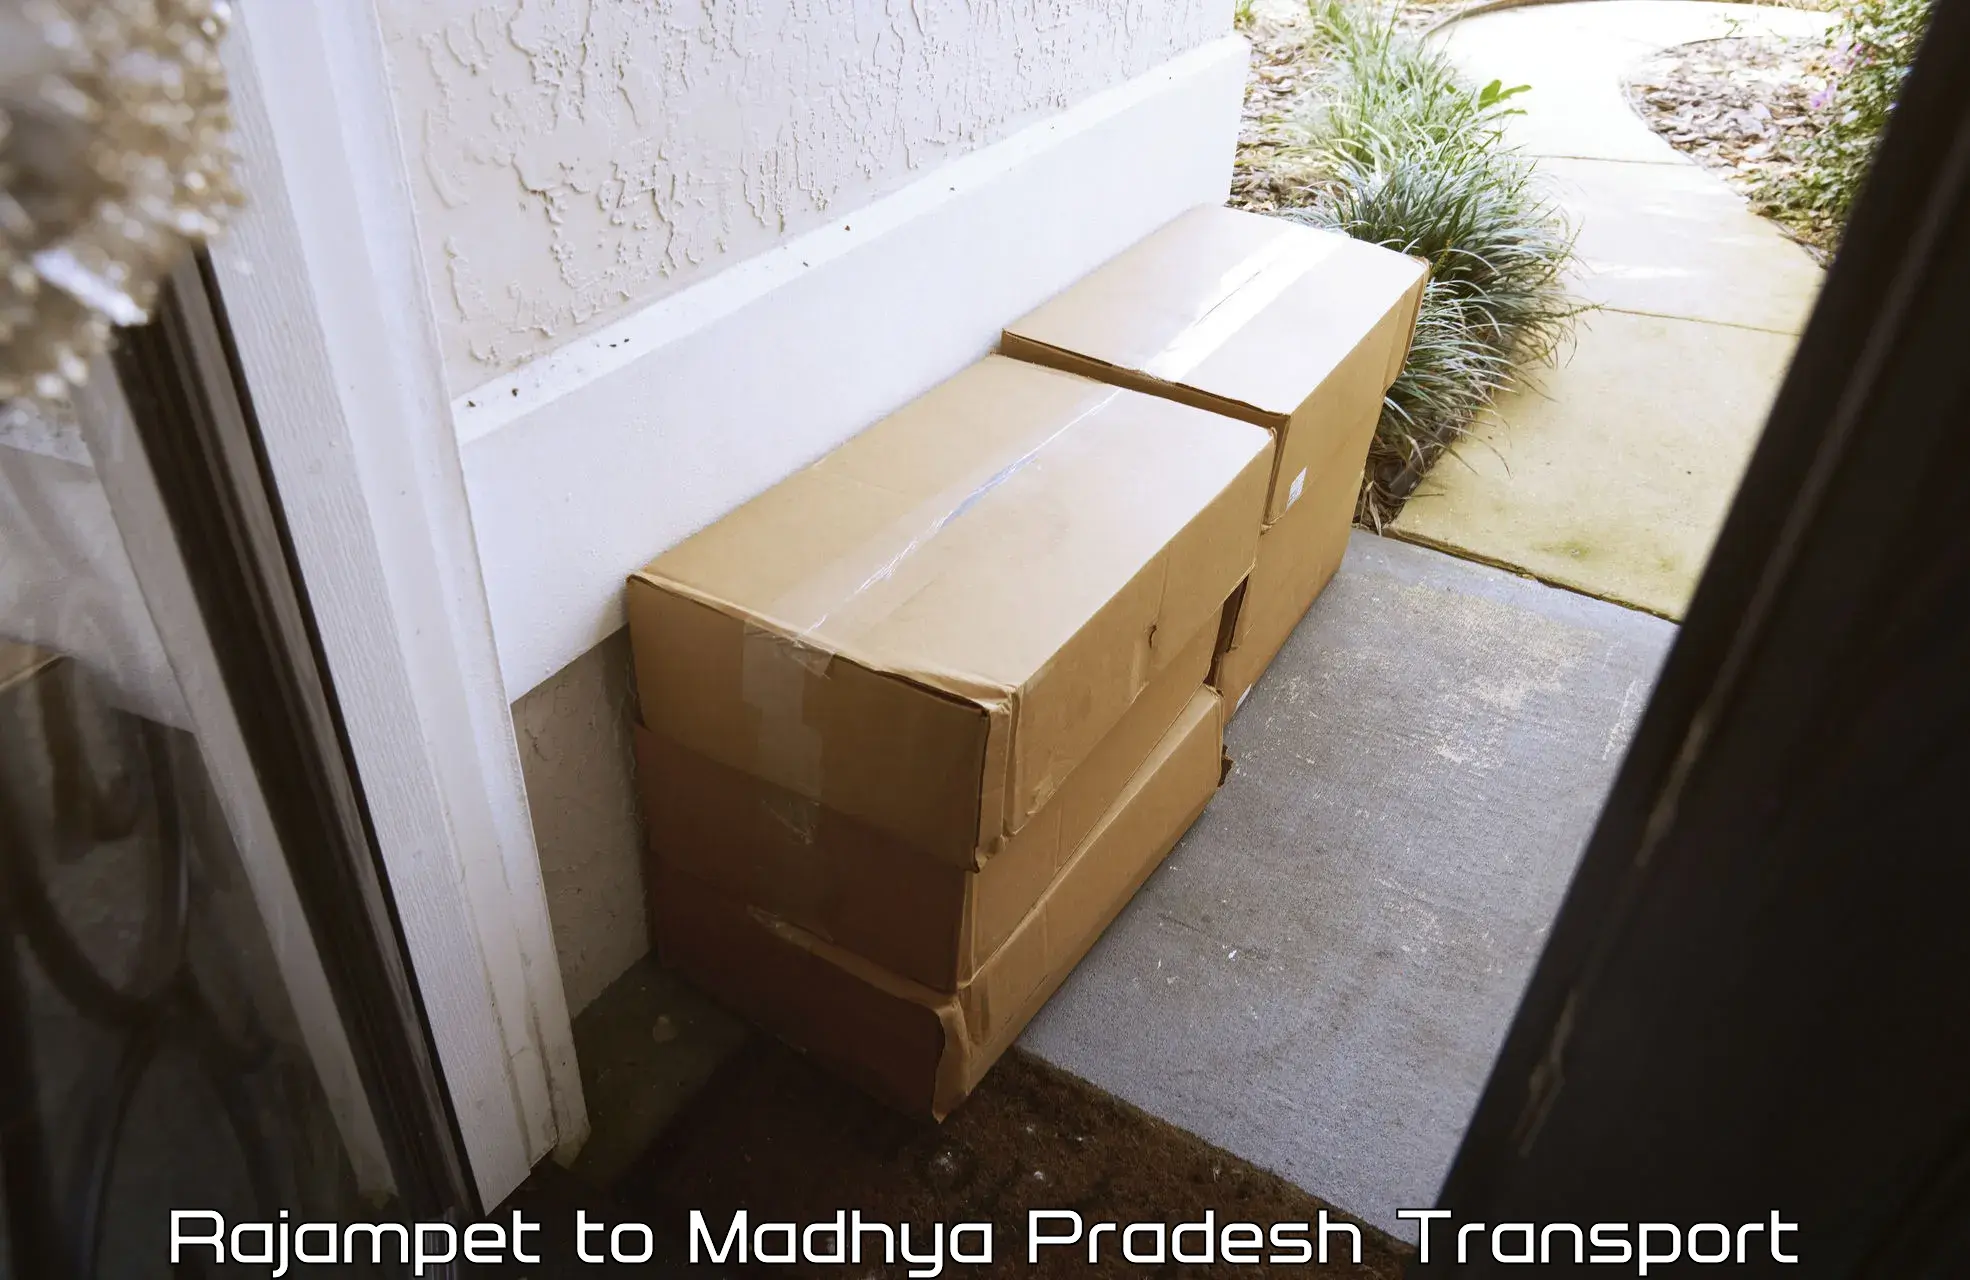 Sending bike to another city Rajampet to Madhya Pradesh